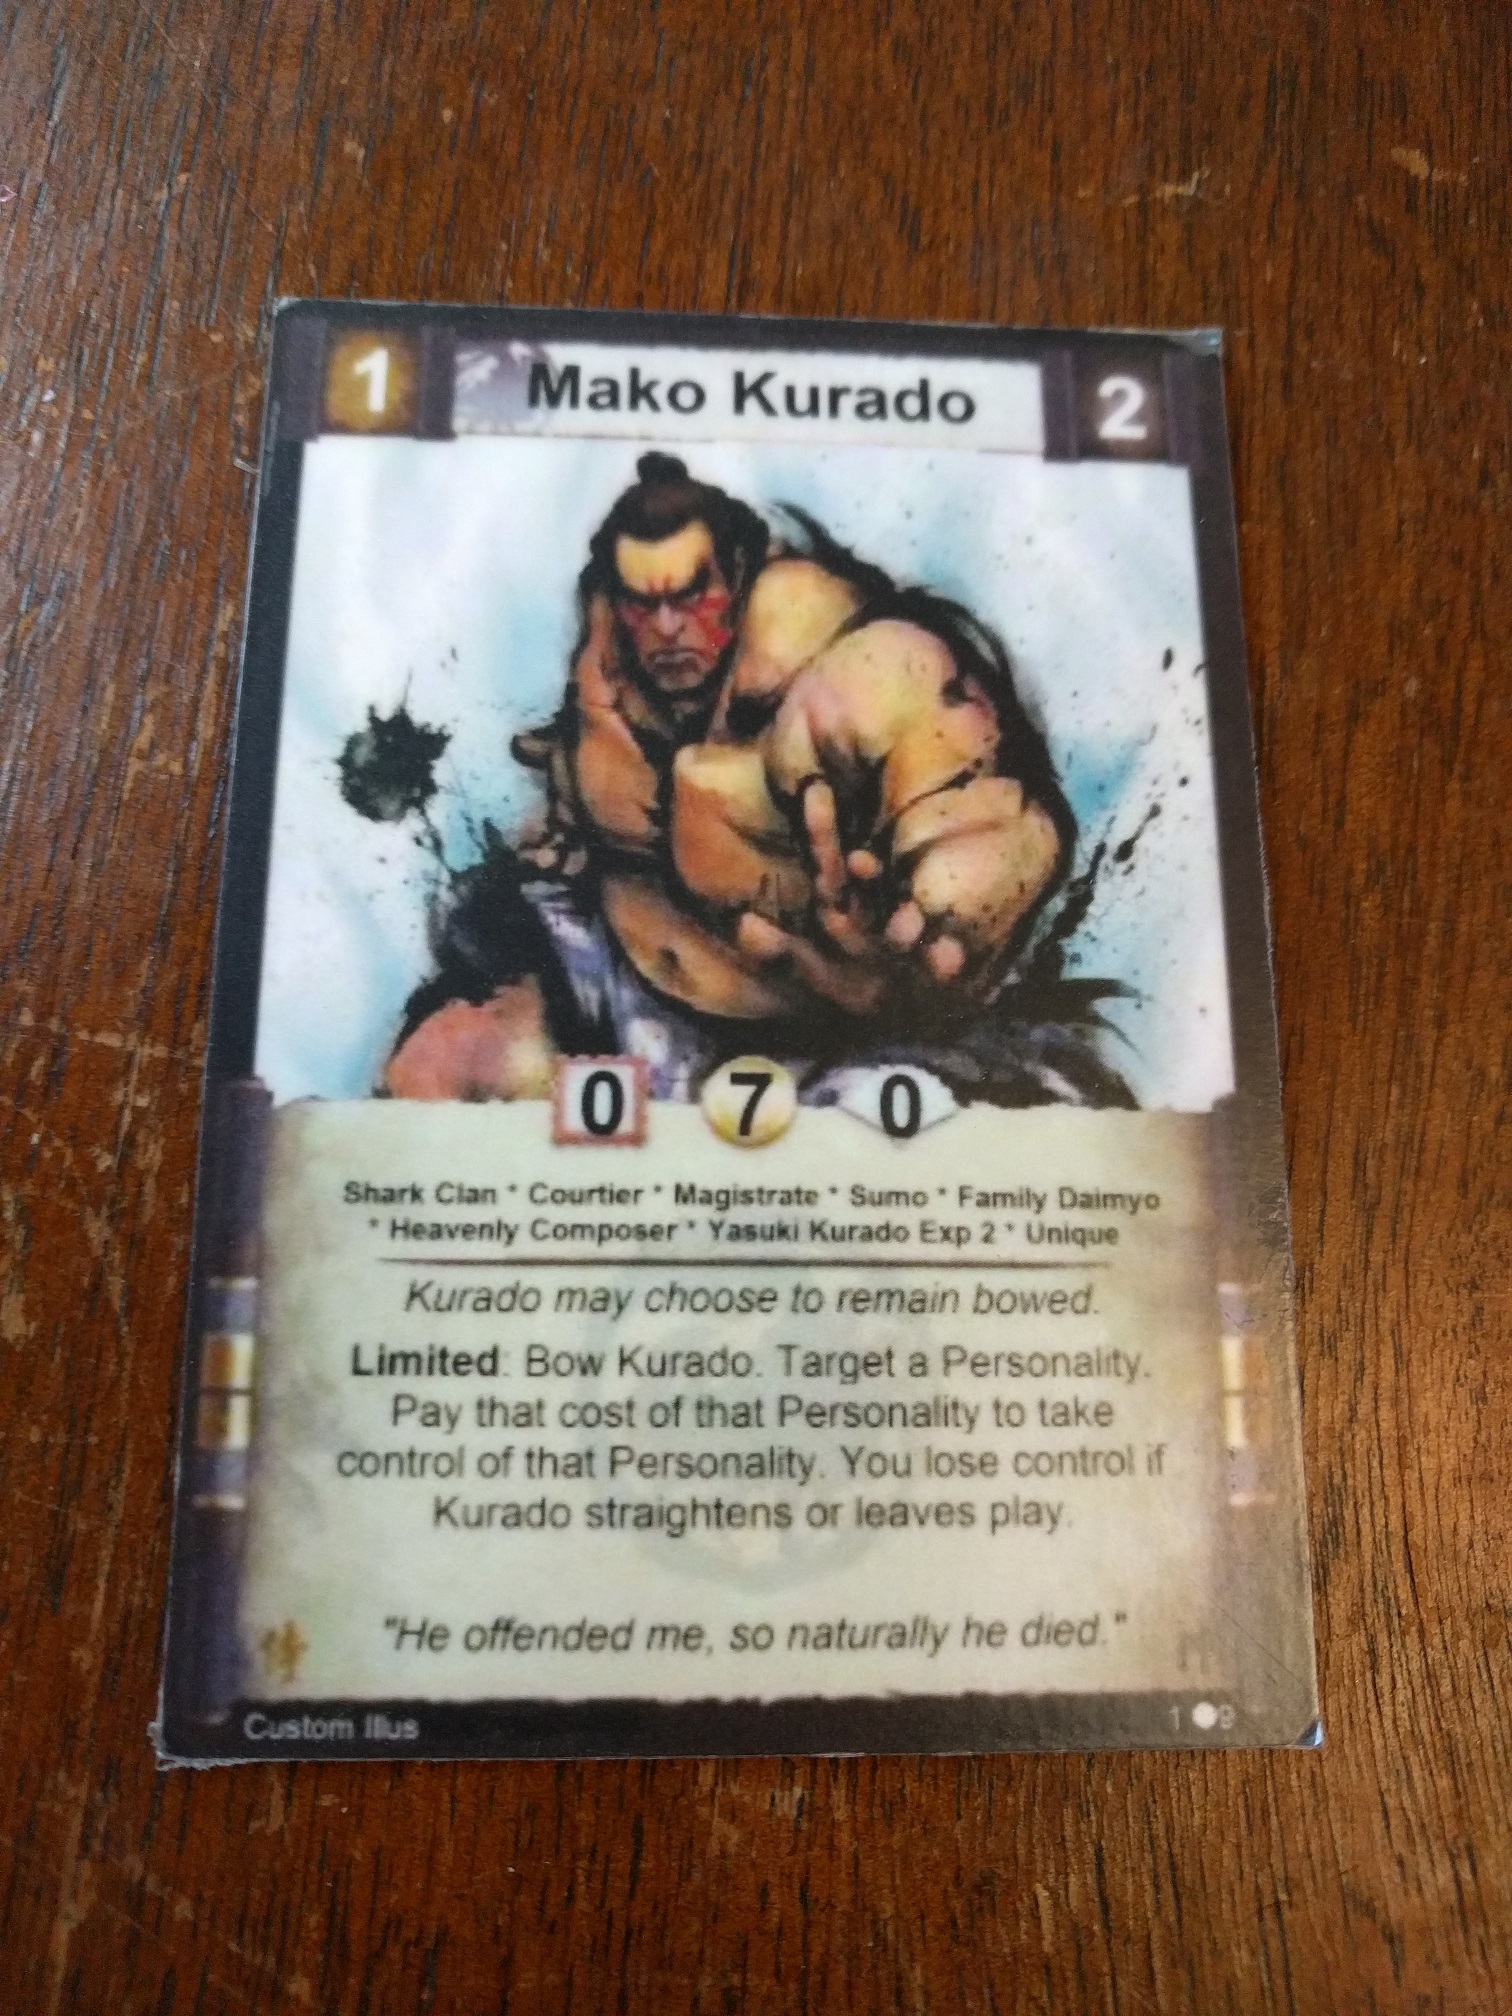 Mako Kuraido, a legendary warrior